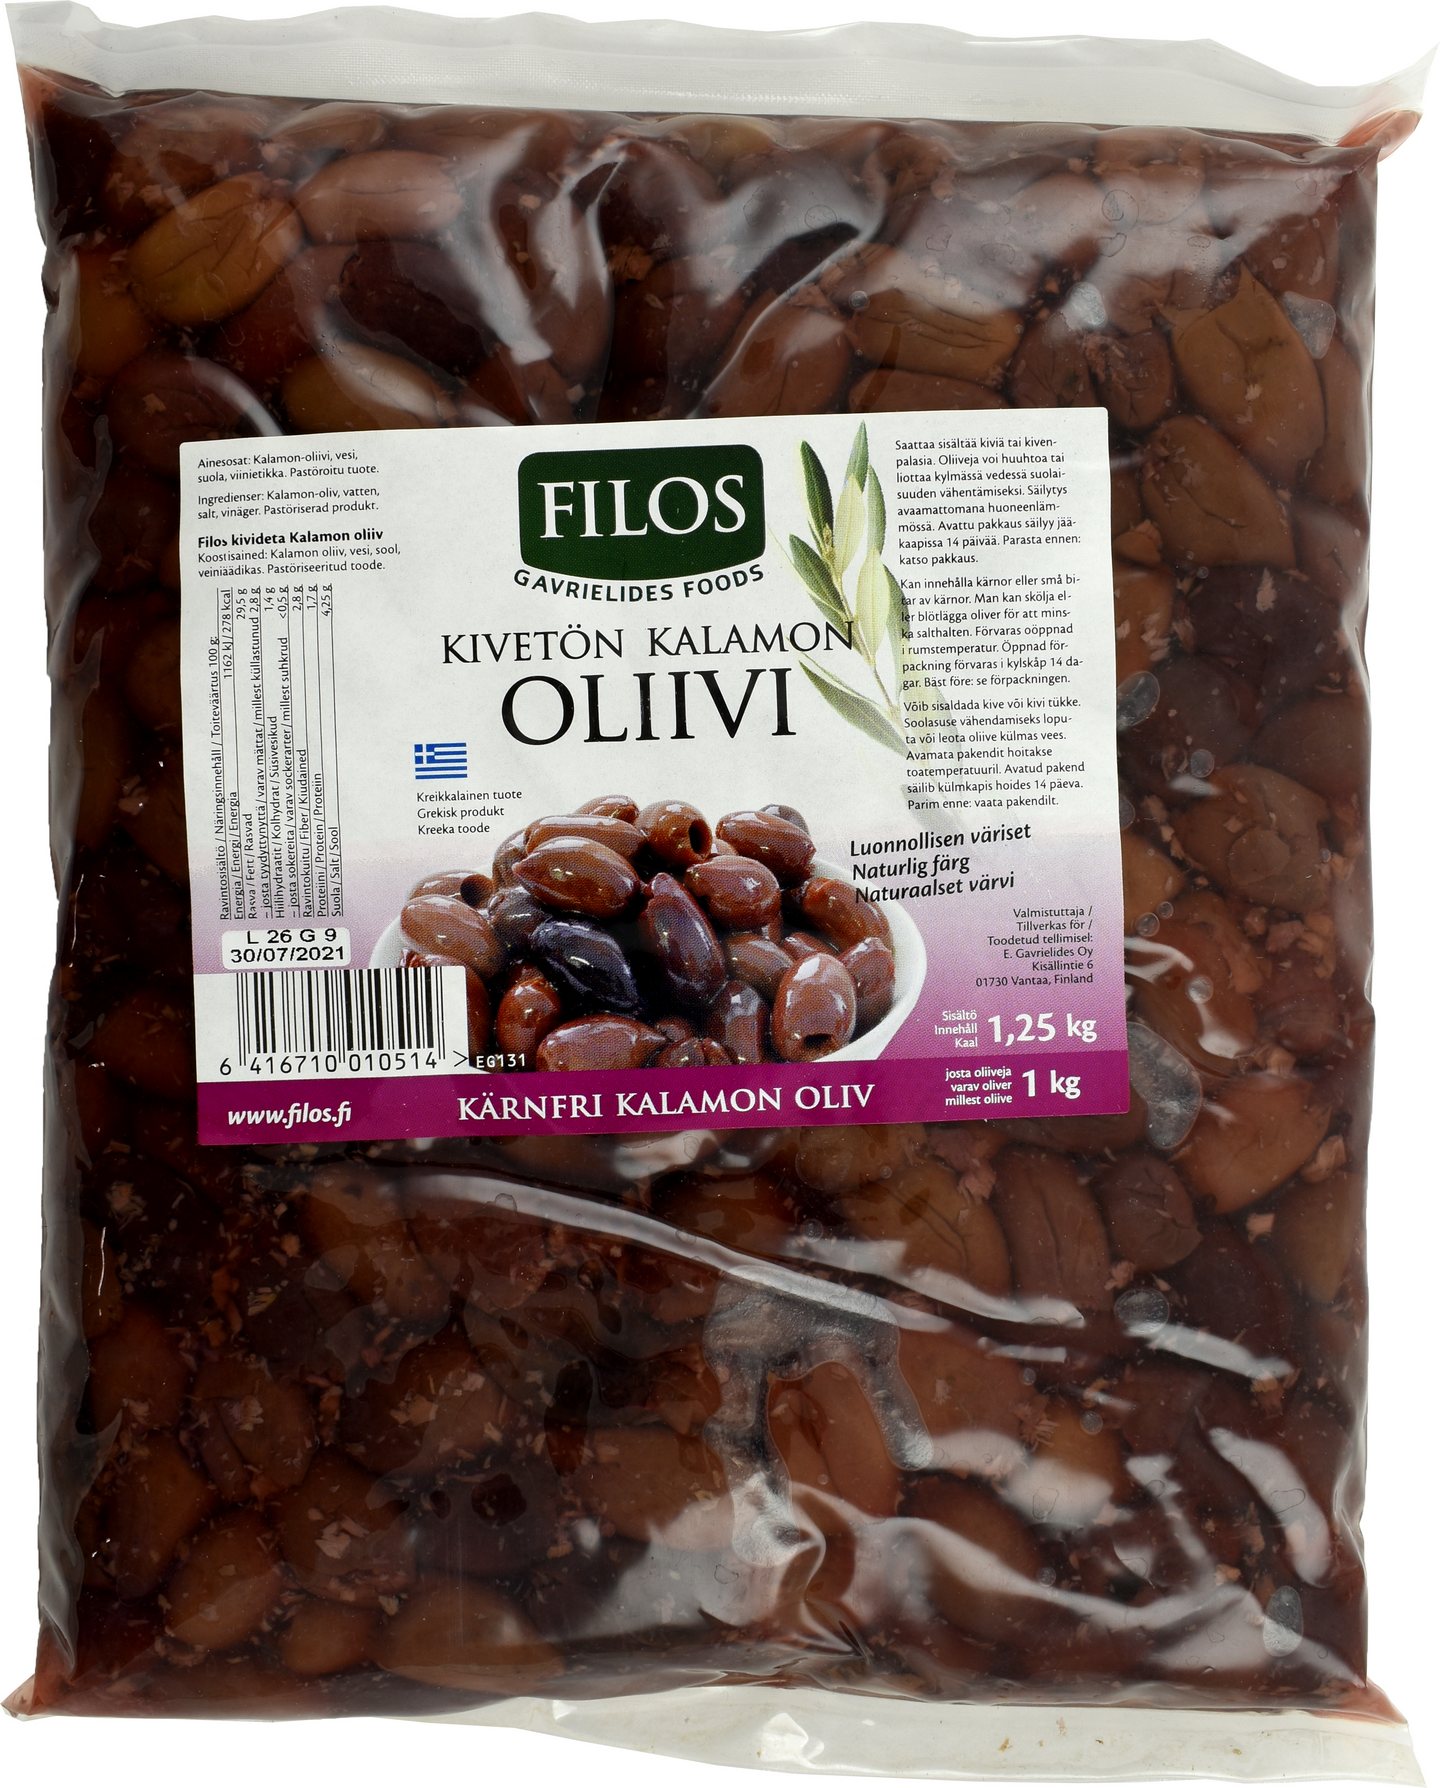 Filos Kalamon-oliivi kivetön 1,25/1 kg